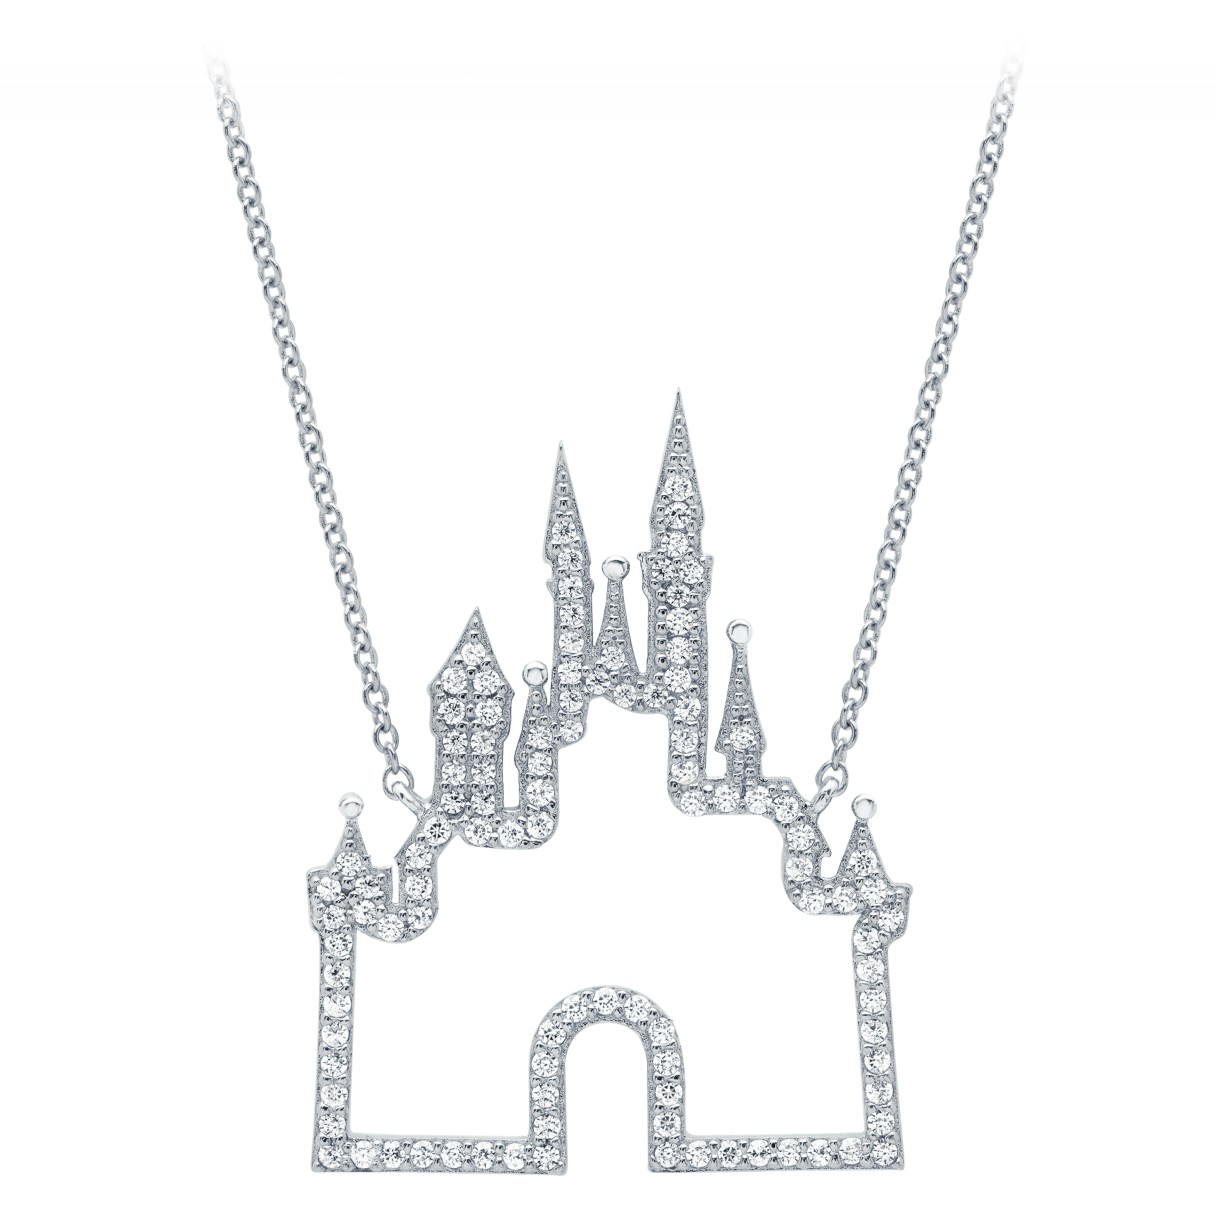 Fantasyland Castle Necklace by CRISLU – Platinum